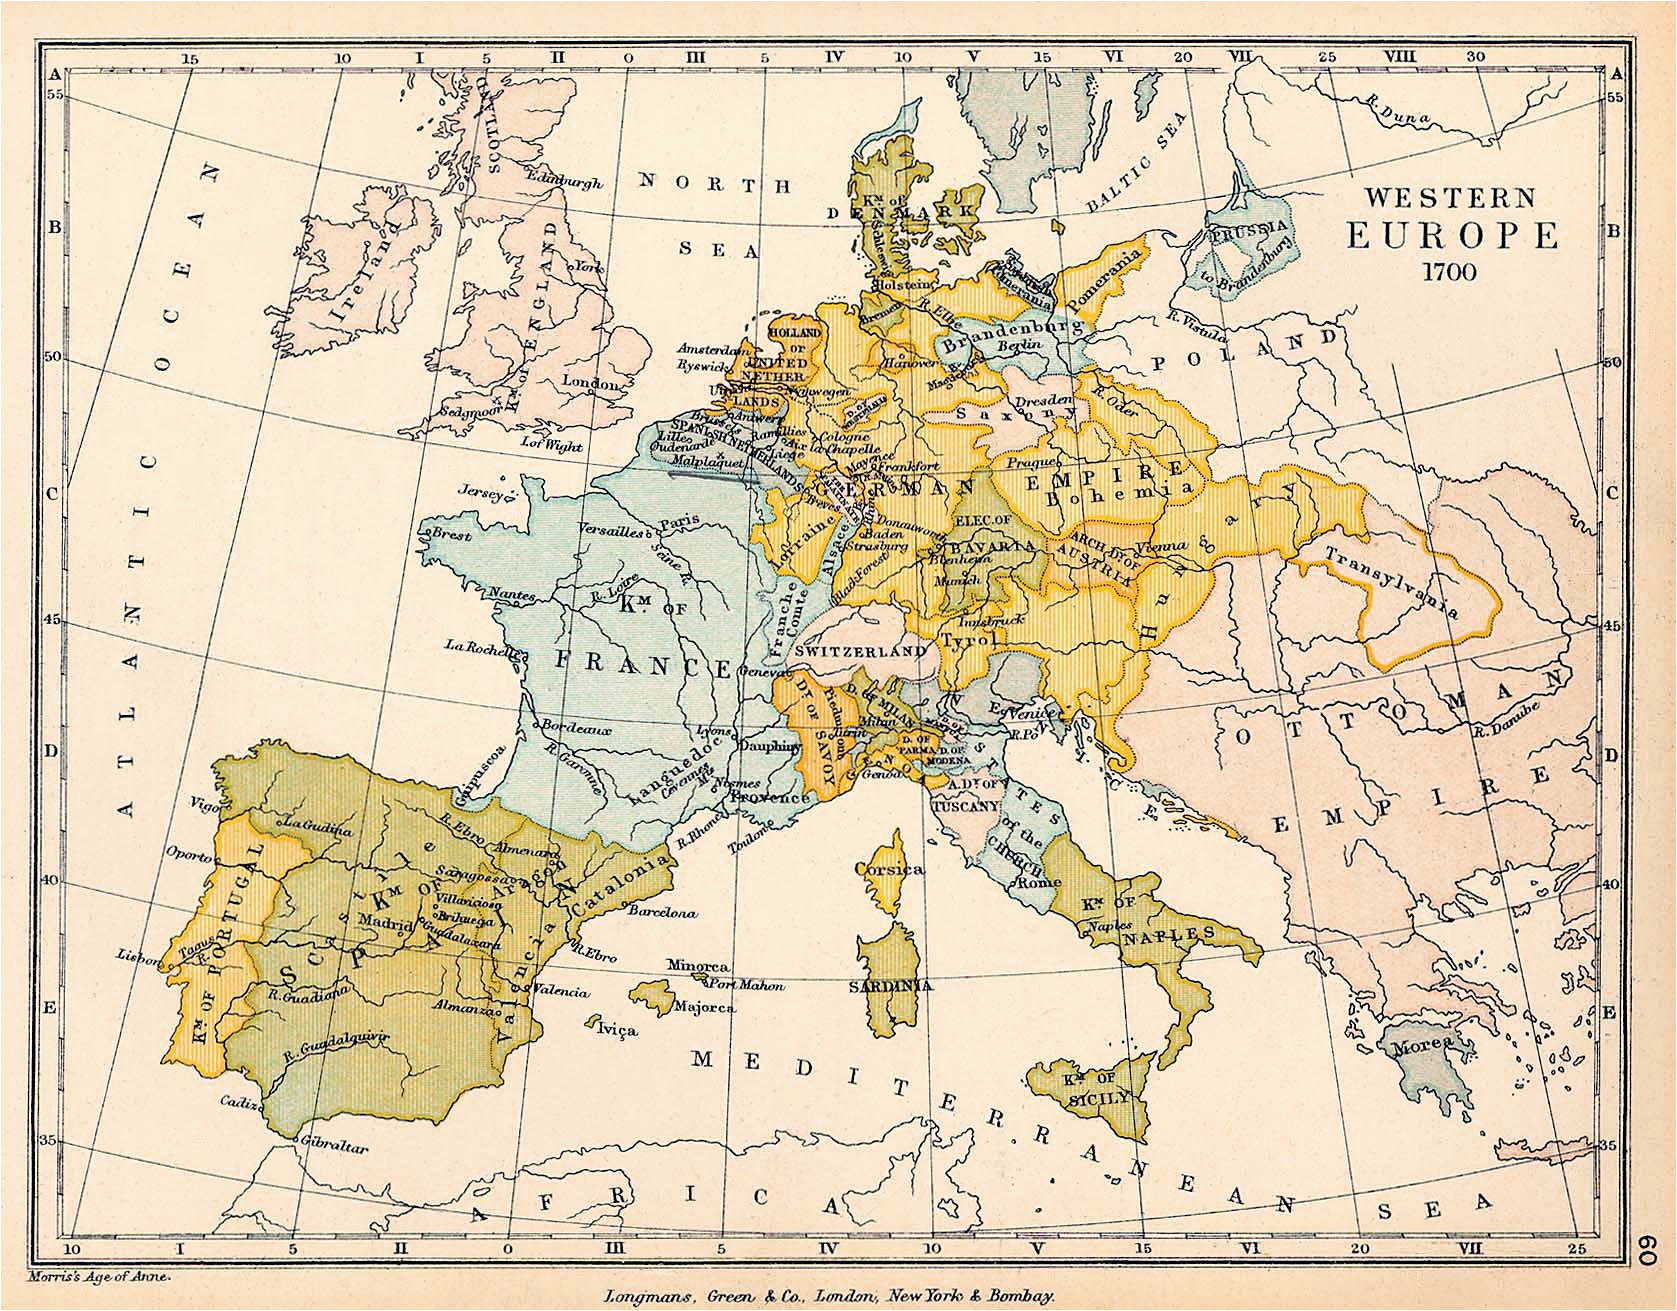 18 Century Europe Map atlas Of European History Wikimedia Commons